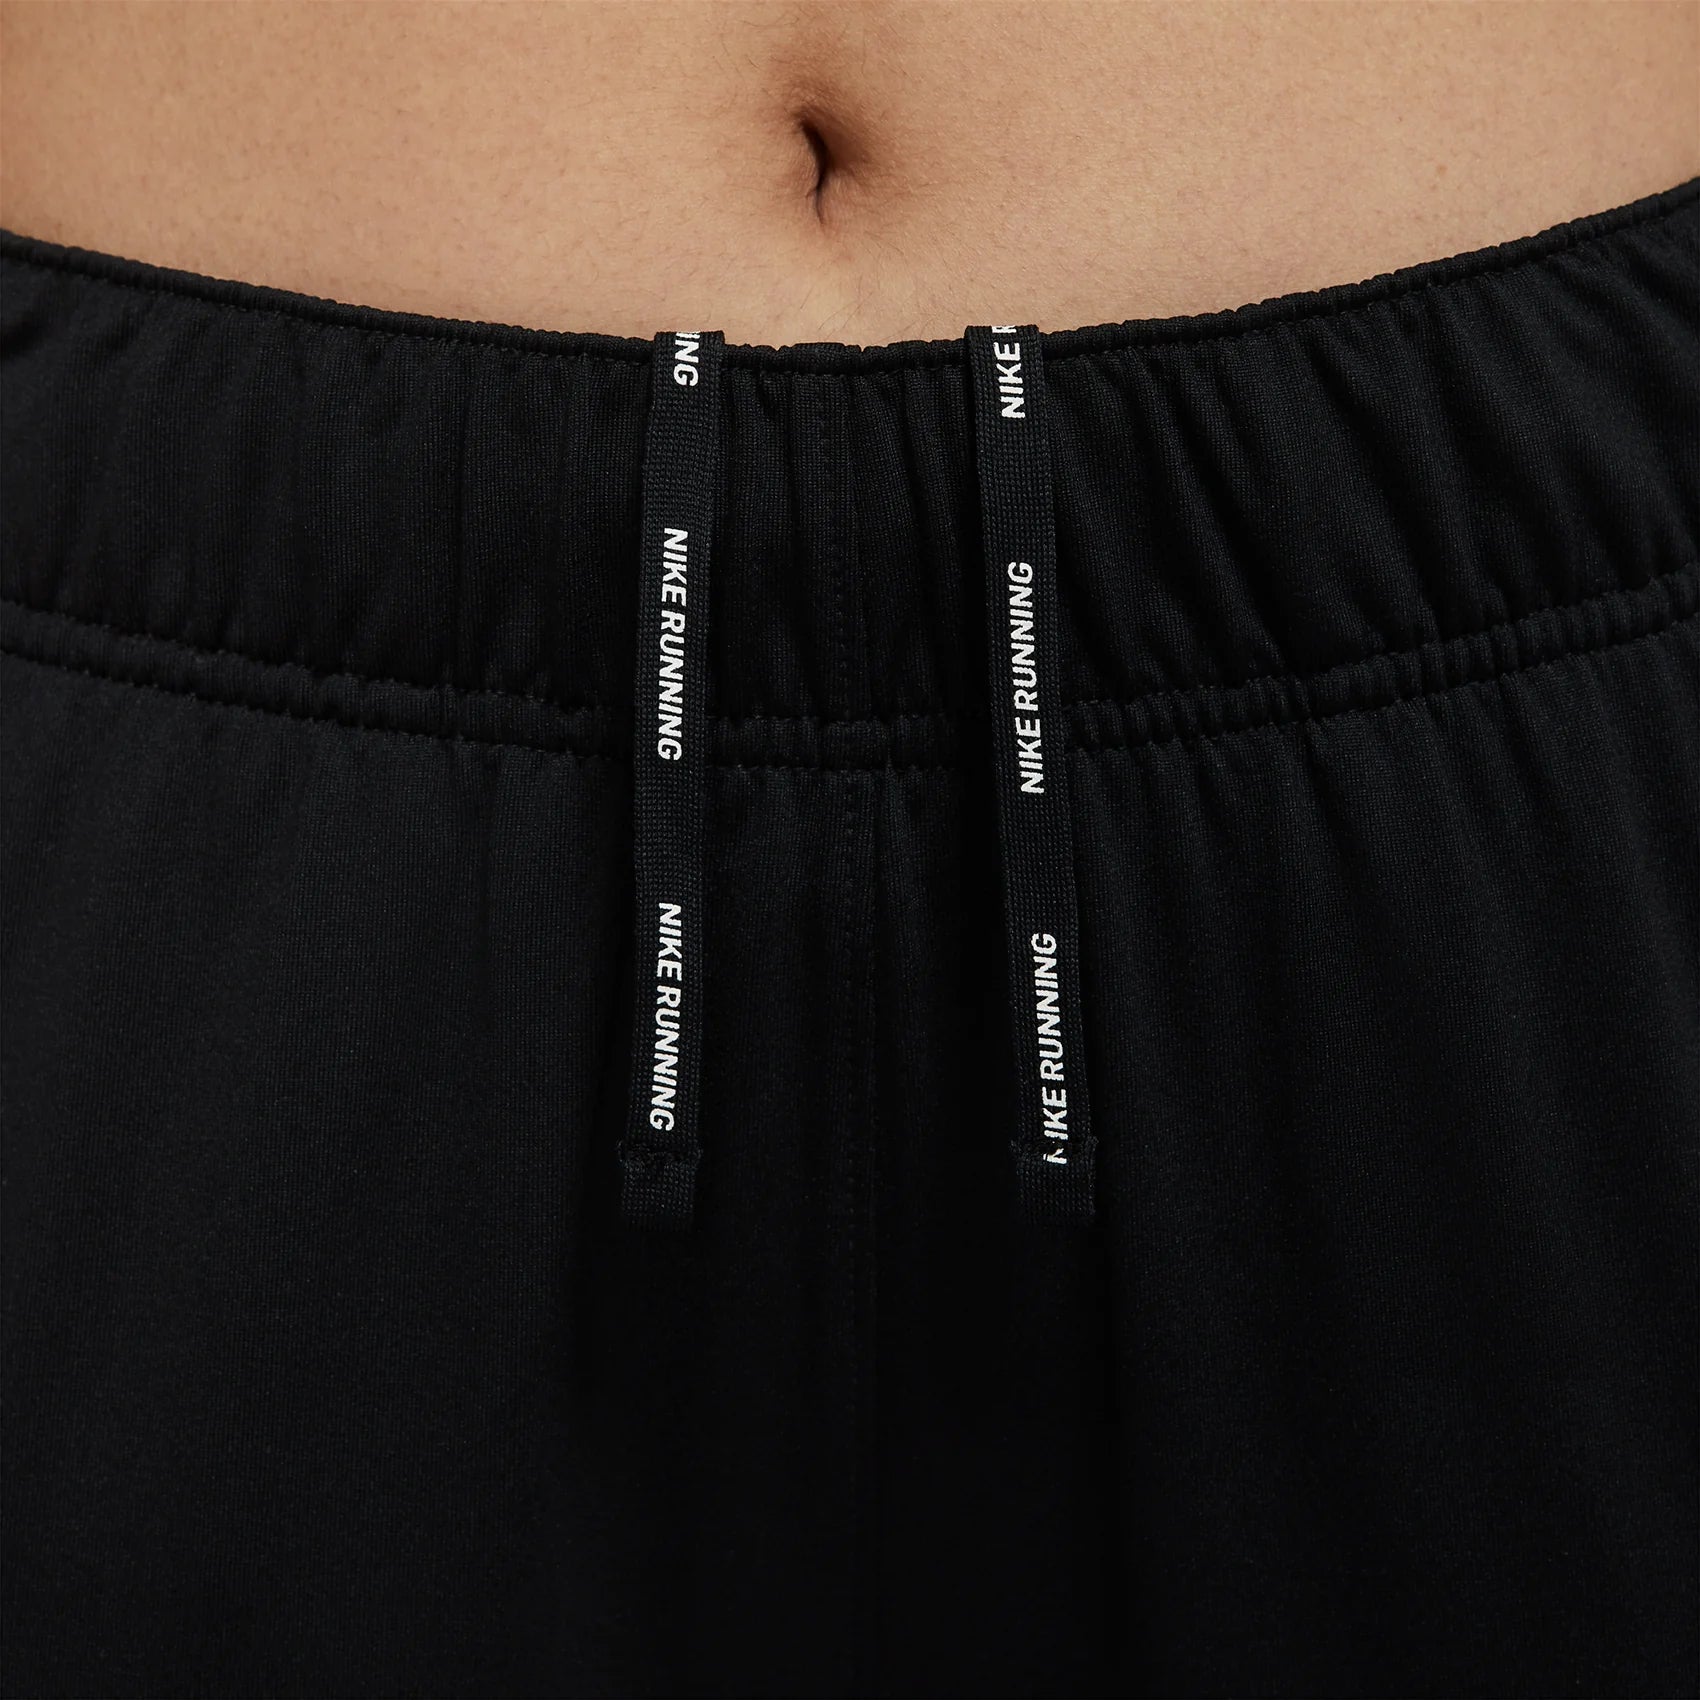 Nike Womens Therma FIT Essential Warm Running Pants Black 3X